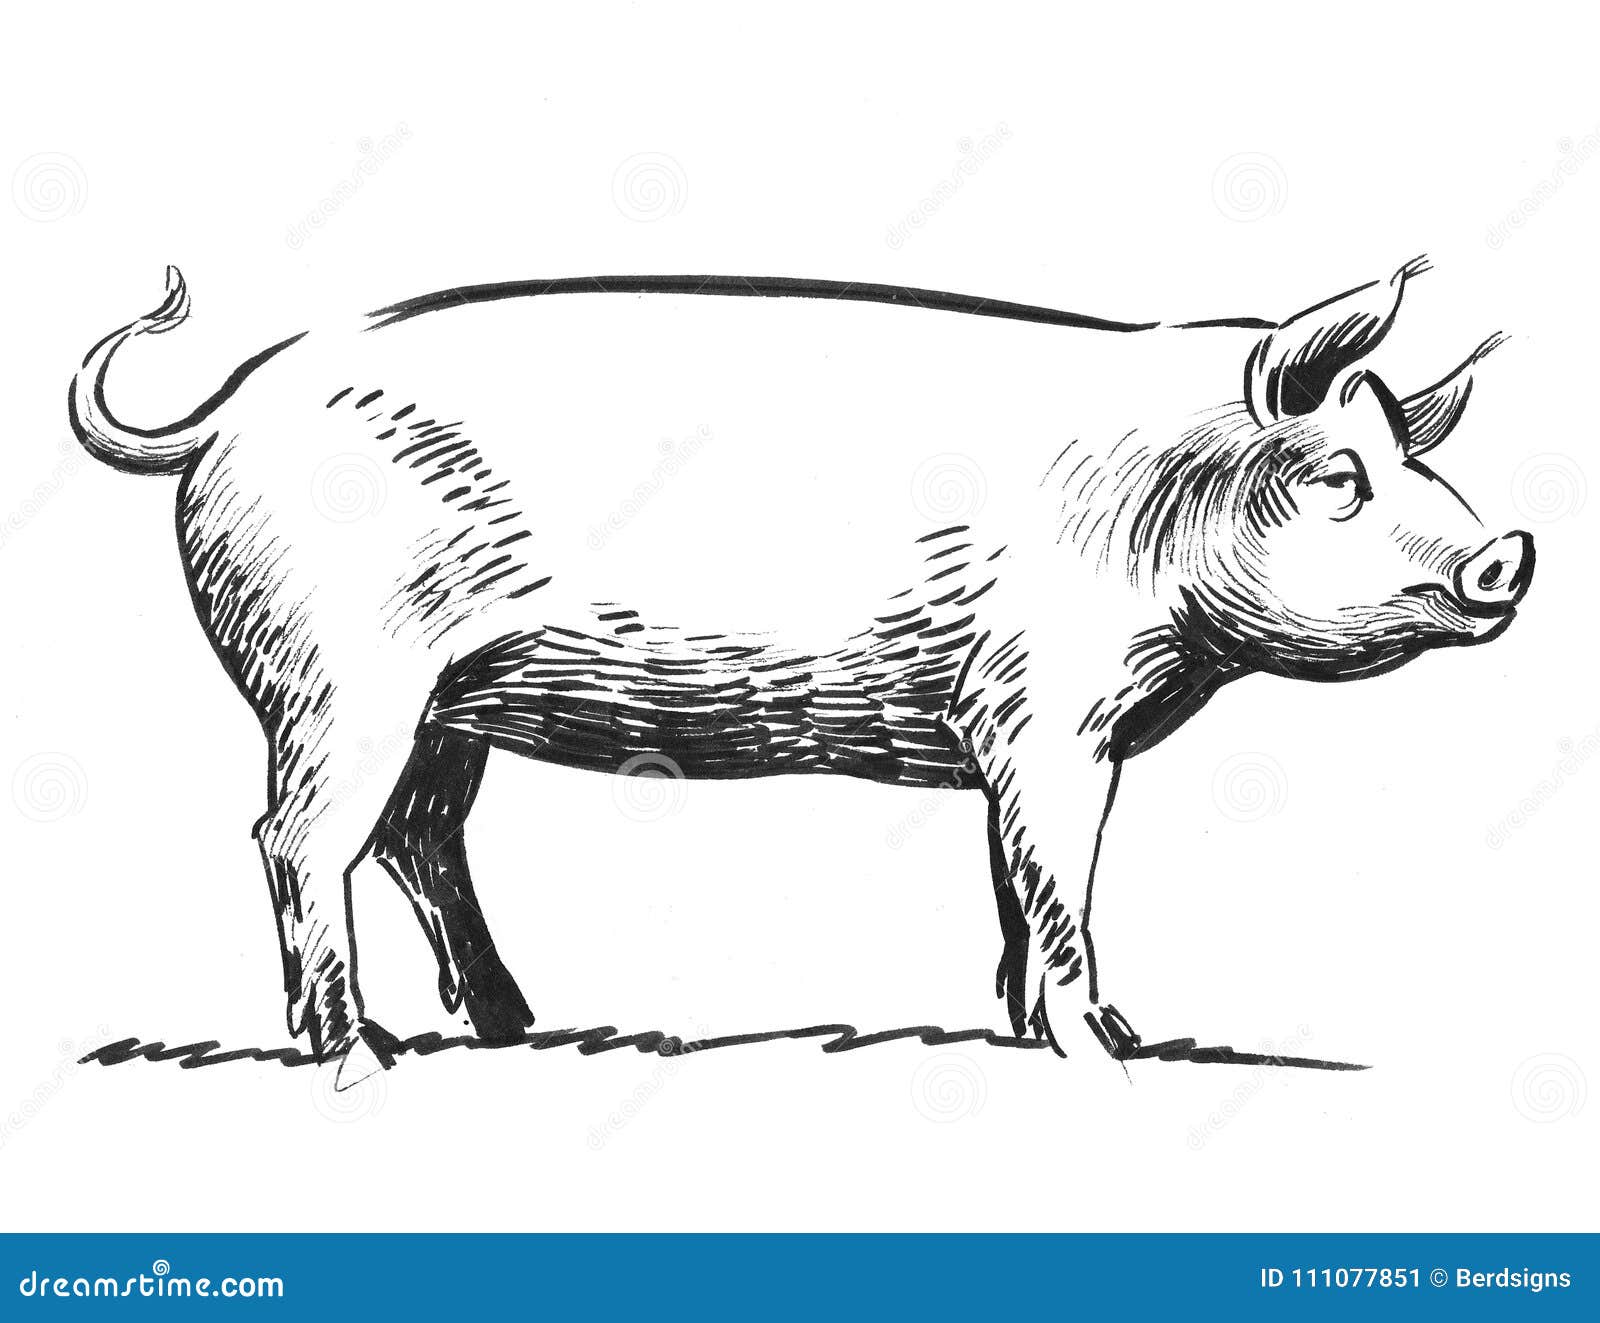 Pig Sketch Stock Illustration Illustration Of Swain 111077851